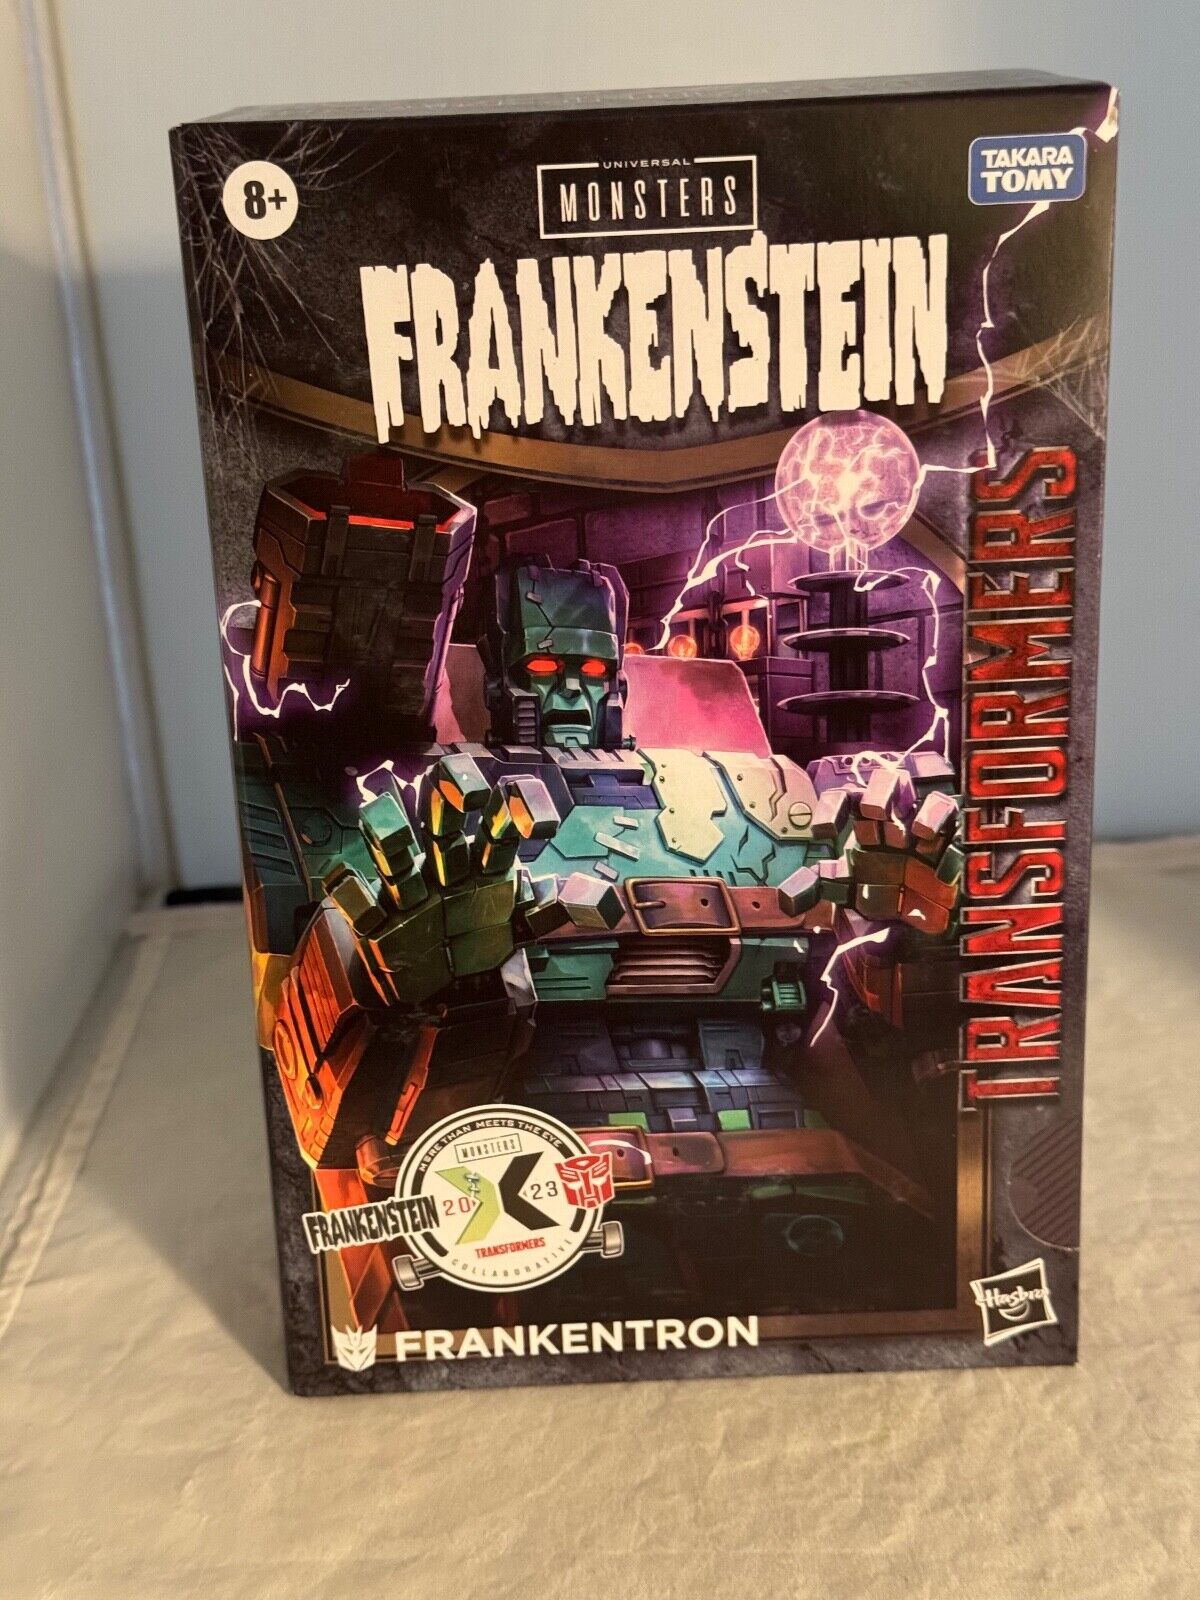 2023 Transformers Universal Monsters Frankenstein Frankentron Action Figure-New